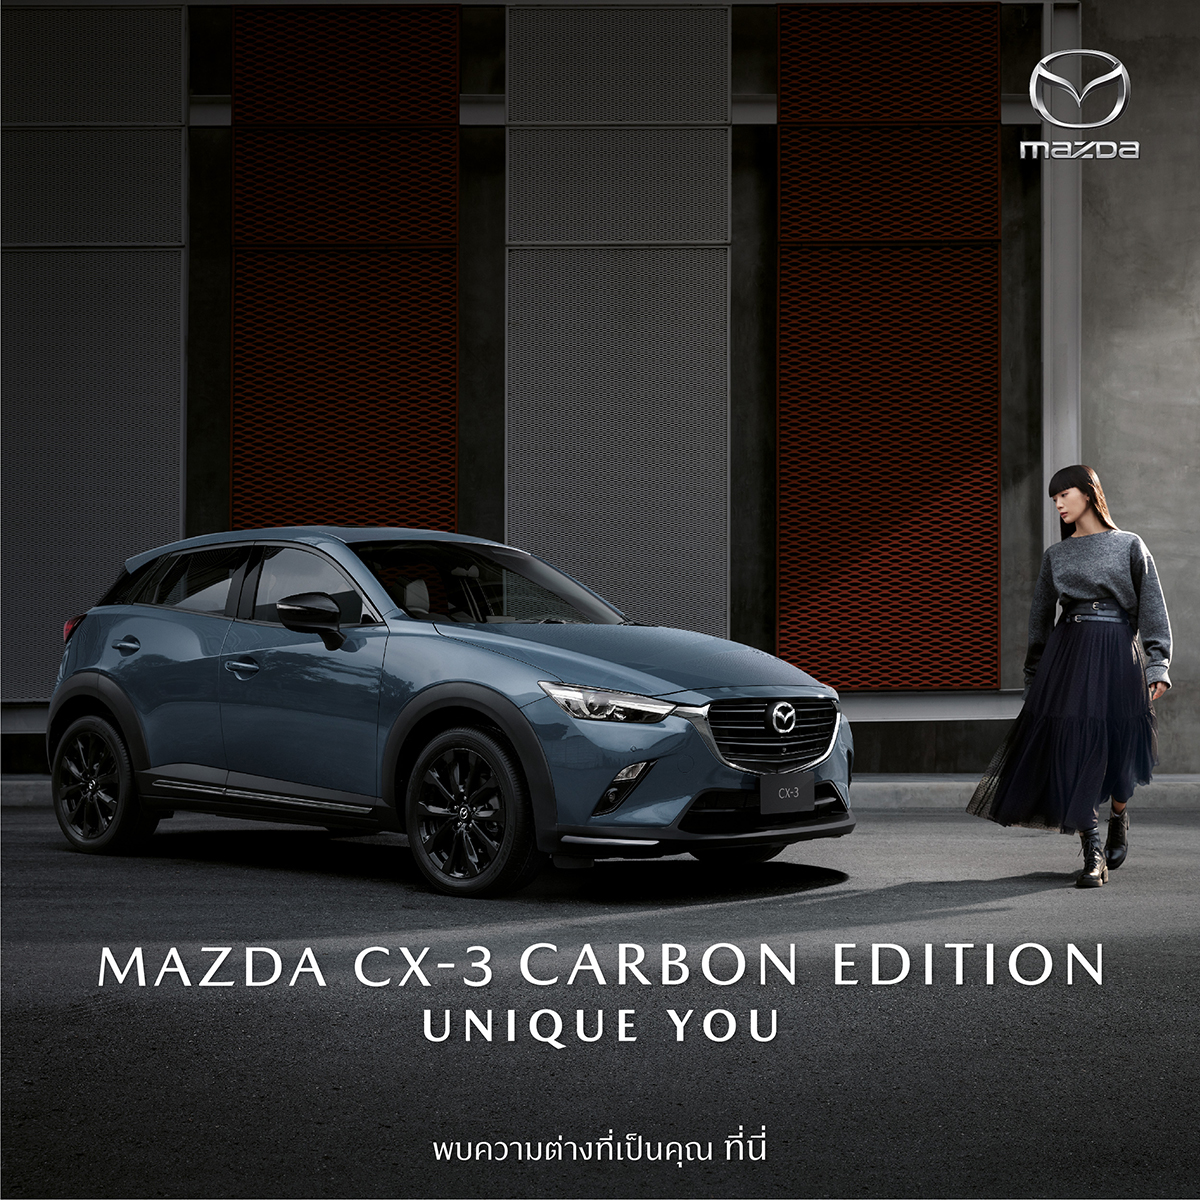 Mazda Carbon Edition